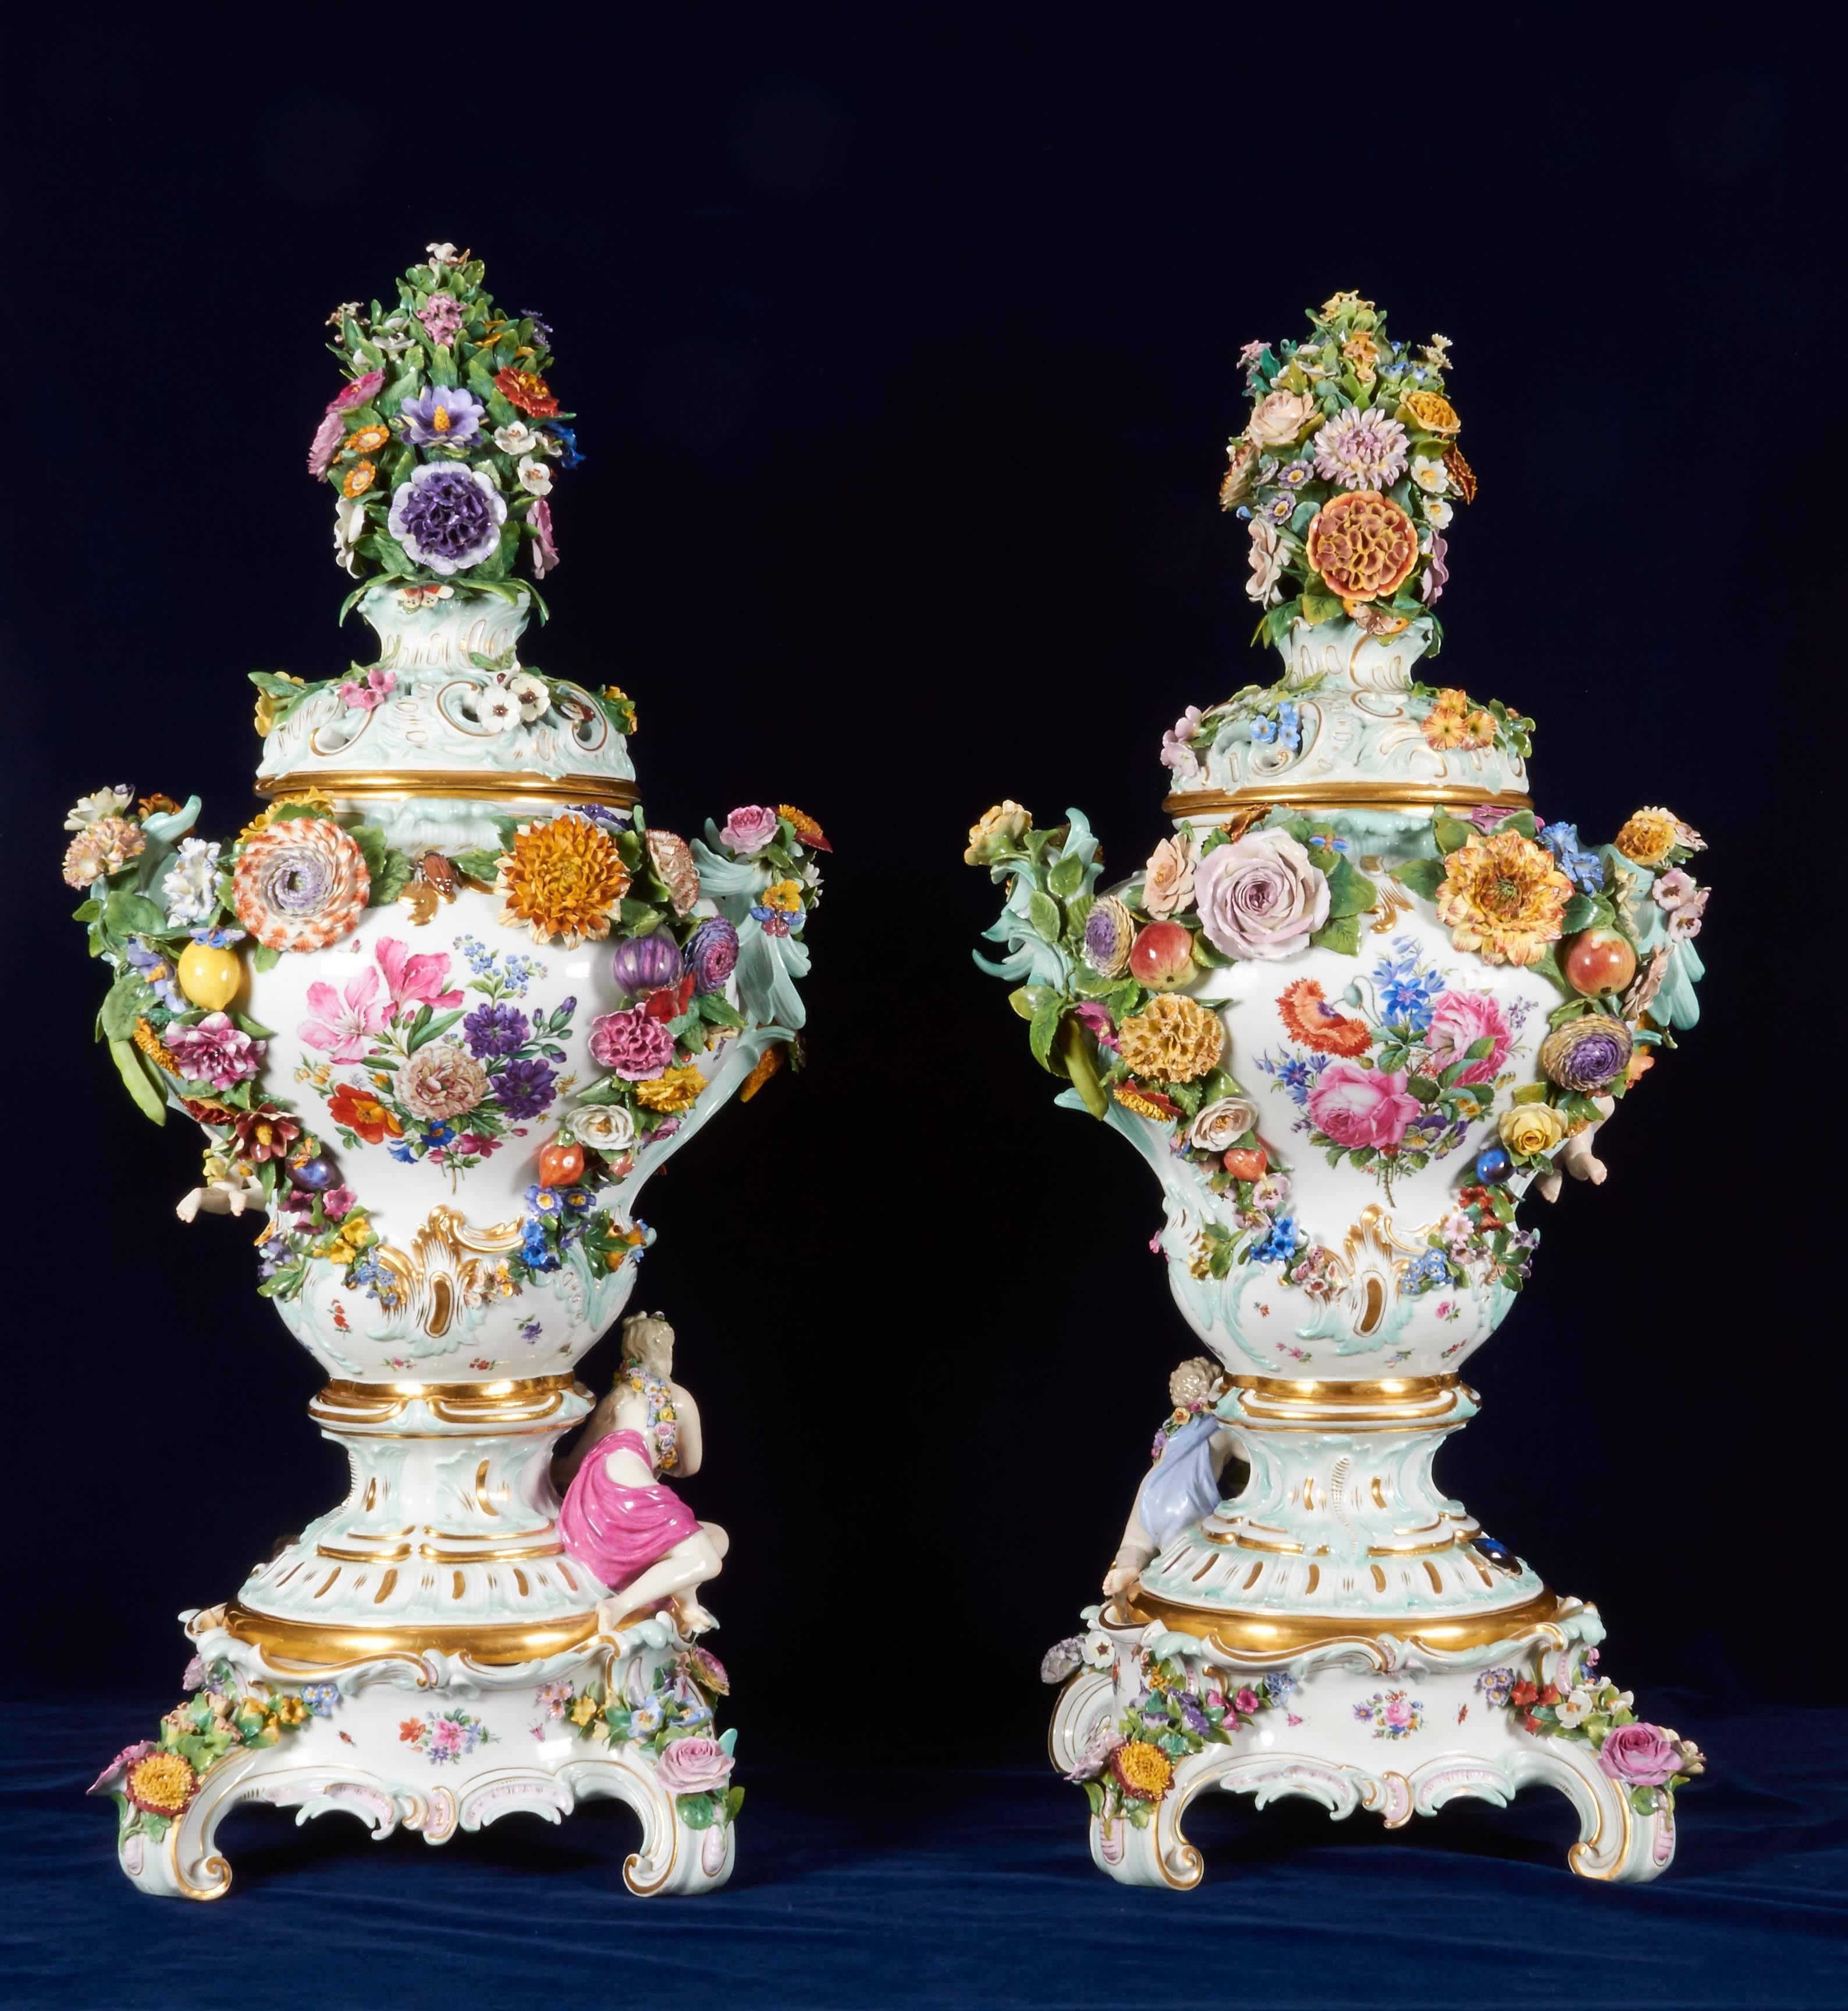 19th Century Monumental Pair of Meissen Porcelain Pot-Pourri Vases, circa 1850